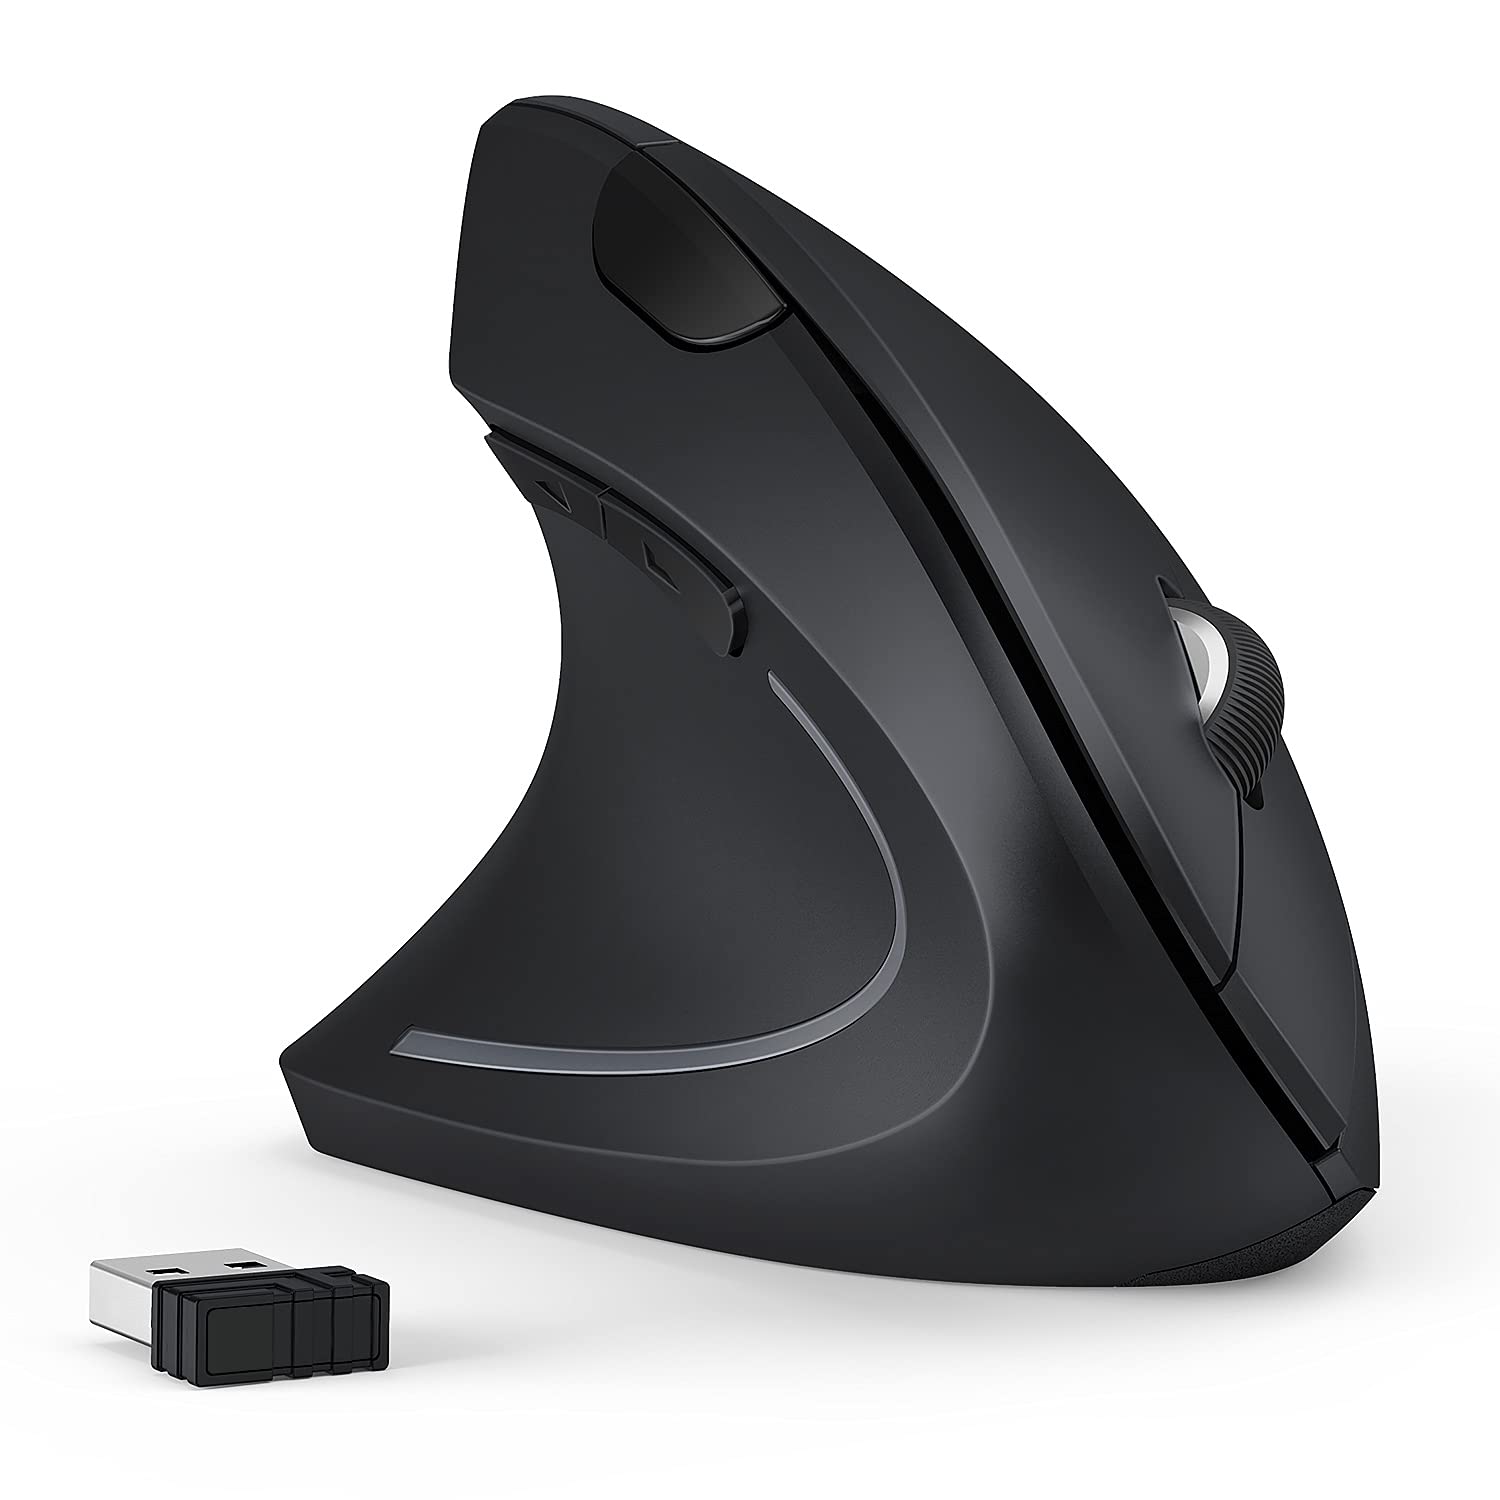 Left Handed Mouse, 2.4G Wireless Ergonomic Mouse with USB Receiver, Ergonomic Vertical Mice for Left-hander, 800/1200/1600 Adjustable DPI Silent Mouse for Computer PC Laptop, Black